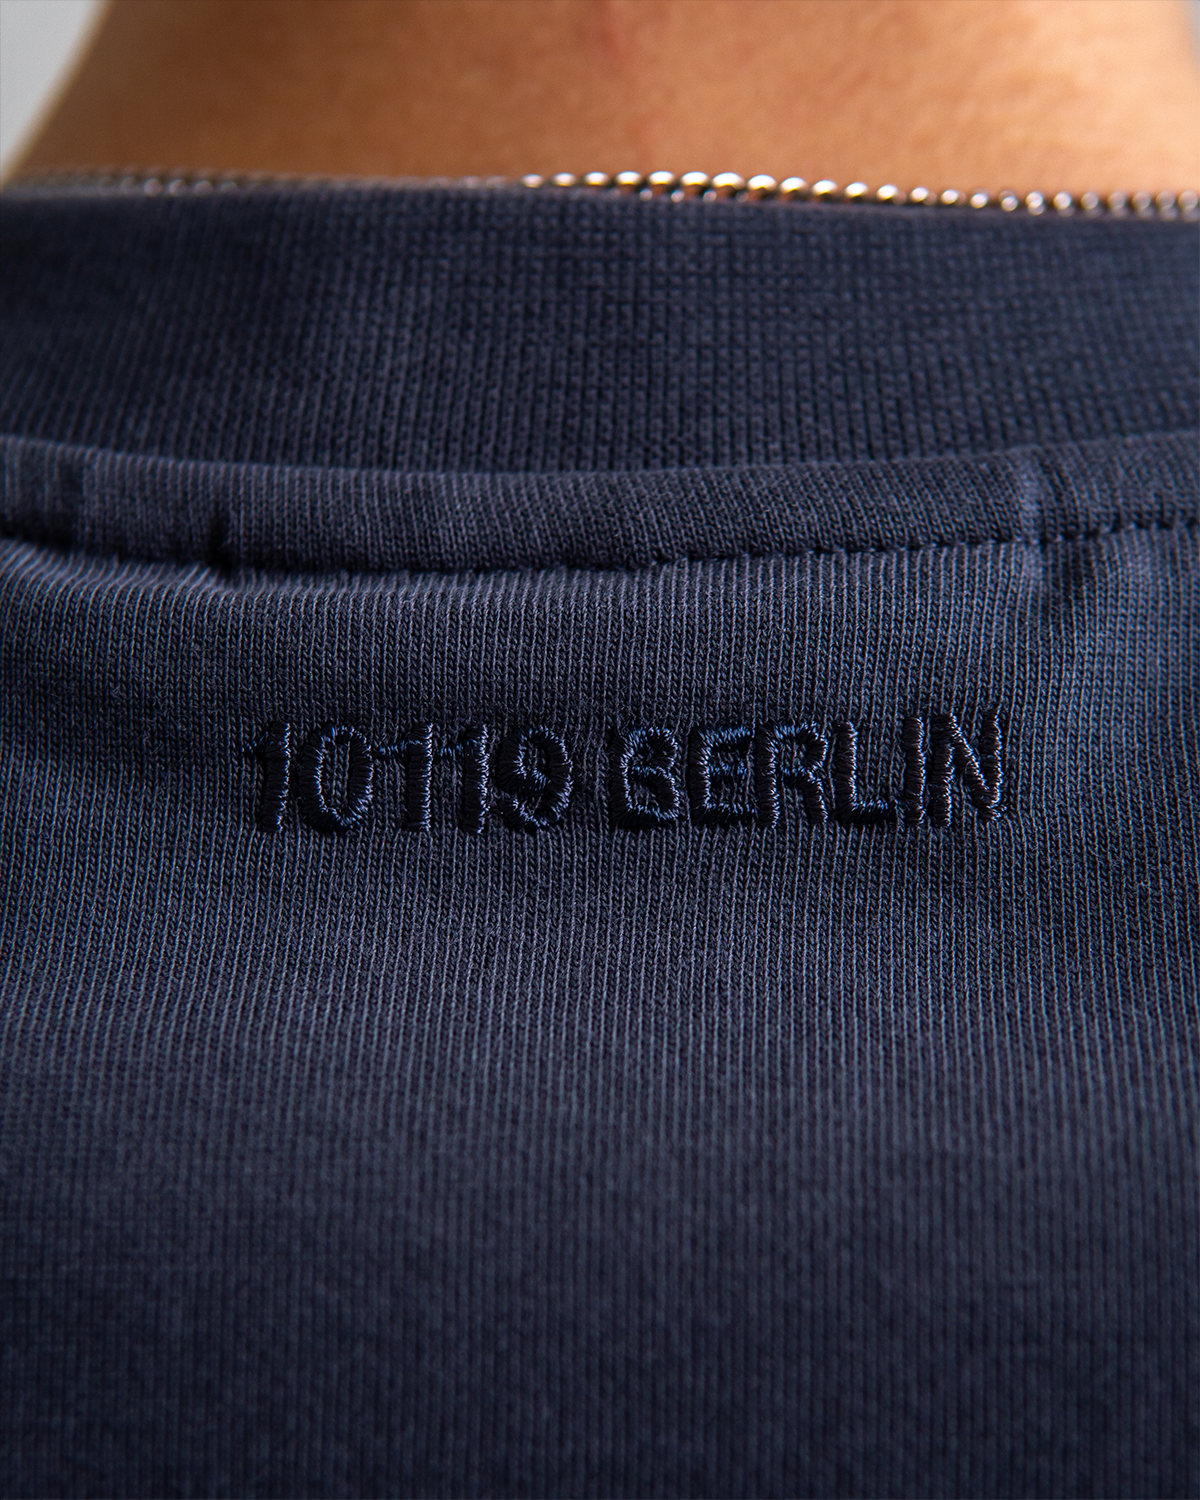 10119 Tee Embroidery Steel Grey